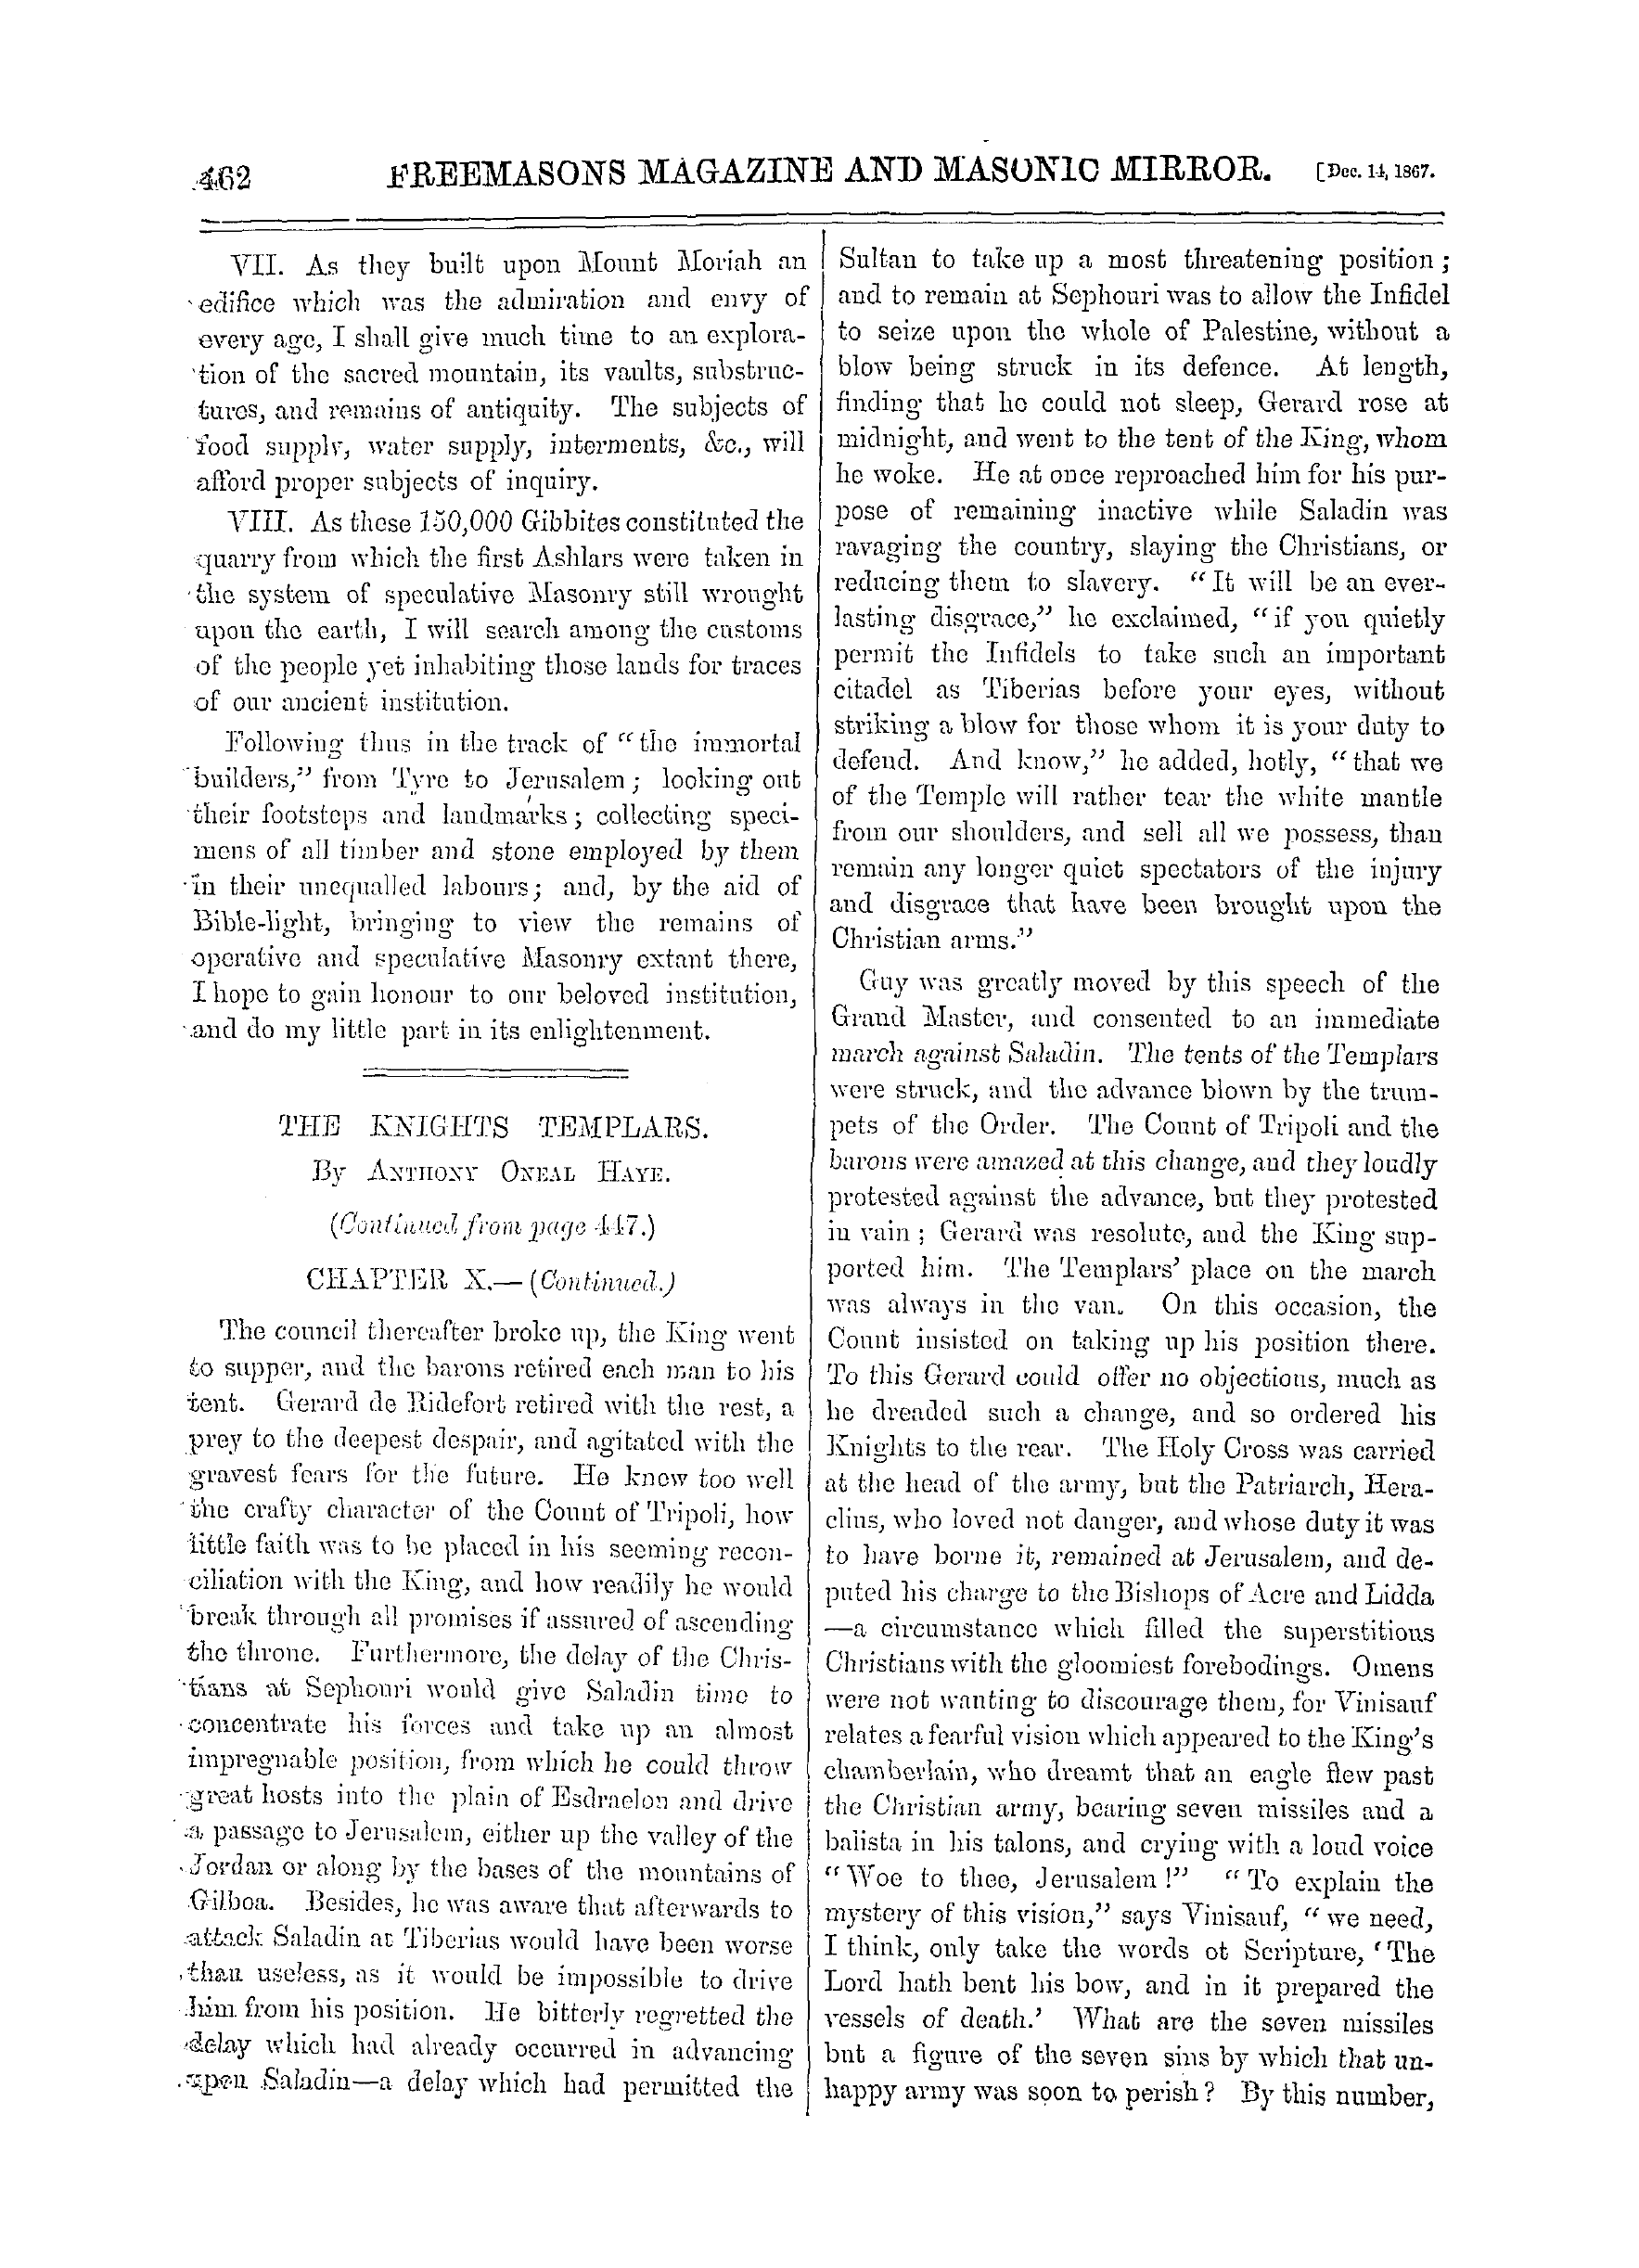 The Freemasons' Monthly Magazine: 1867-12-14 - The Knights Templars.